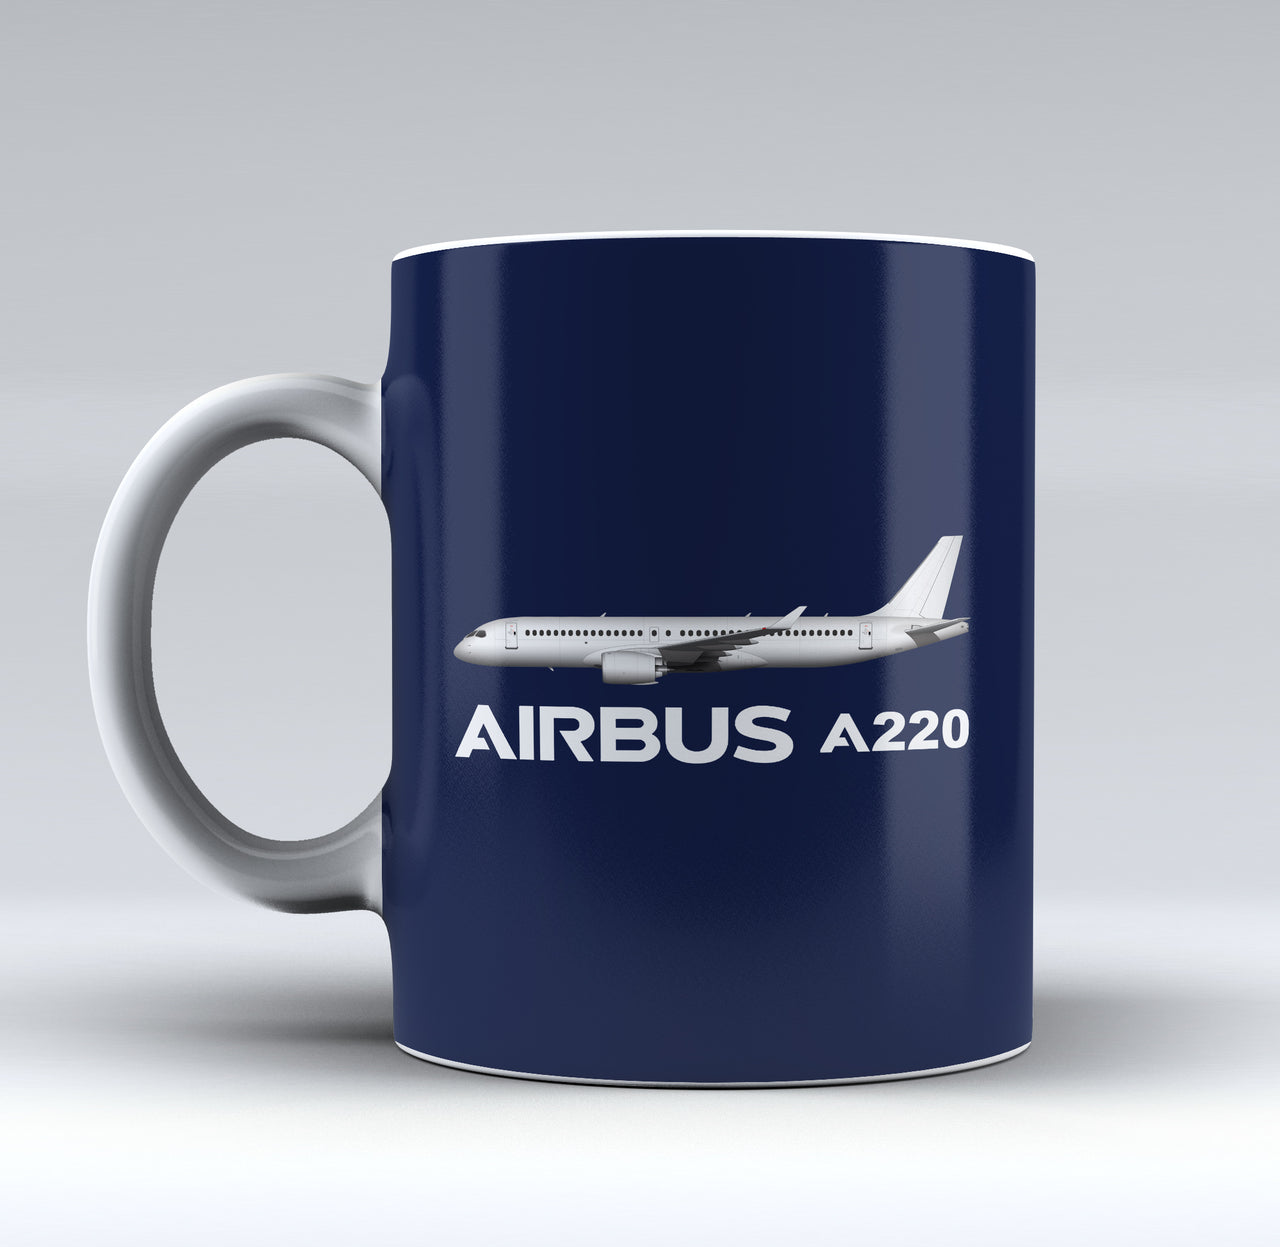 The Airbus A220 Designed Mugs